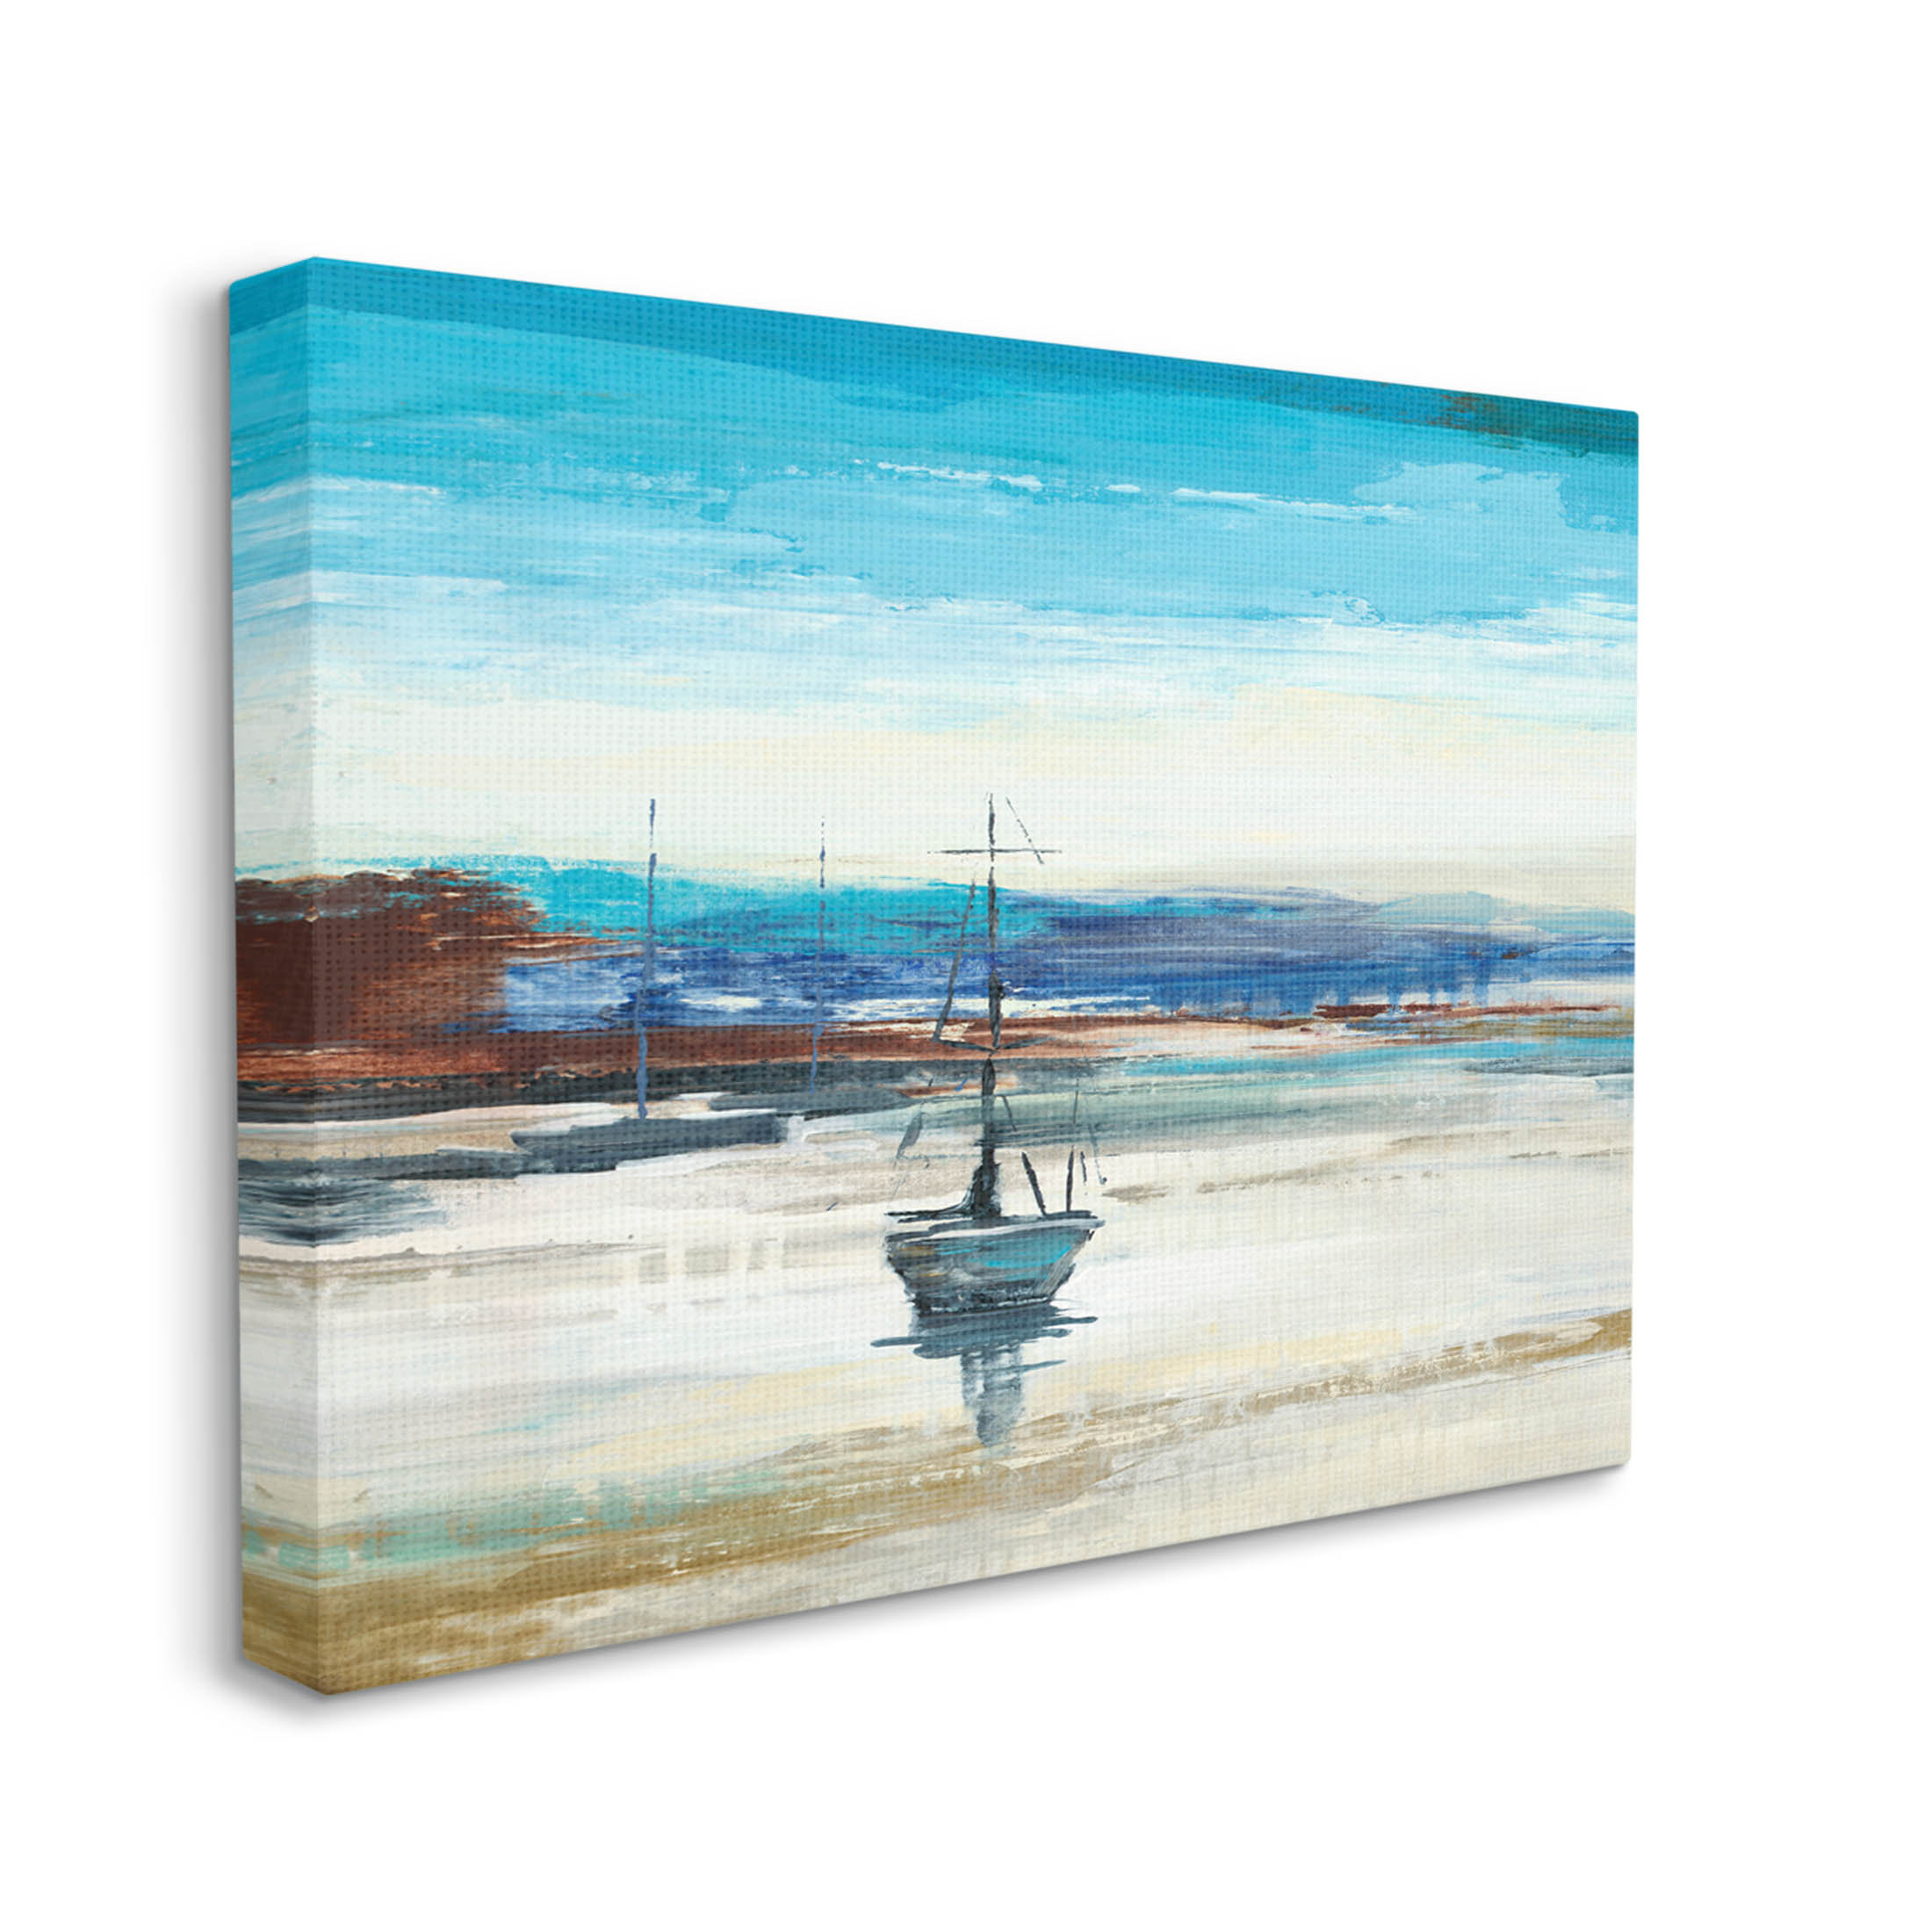 Stupell Abstract Boat Sea Reflection Canvas Wall Art by Liz Jardine - 30 x 24